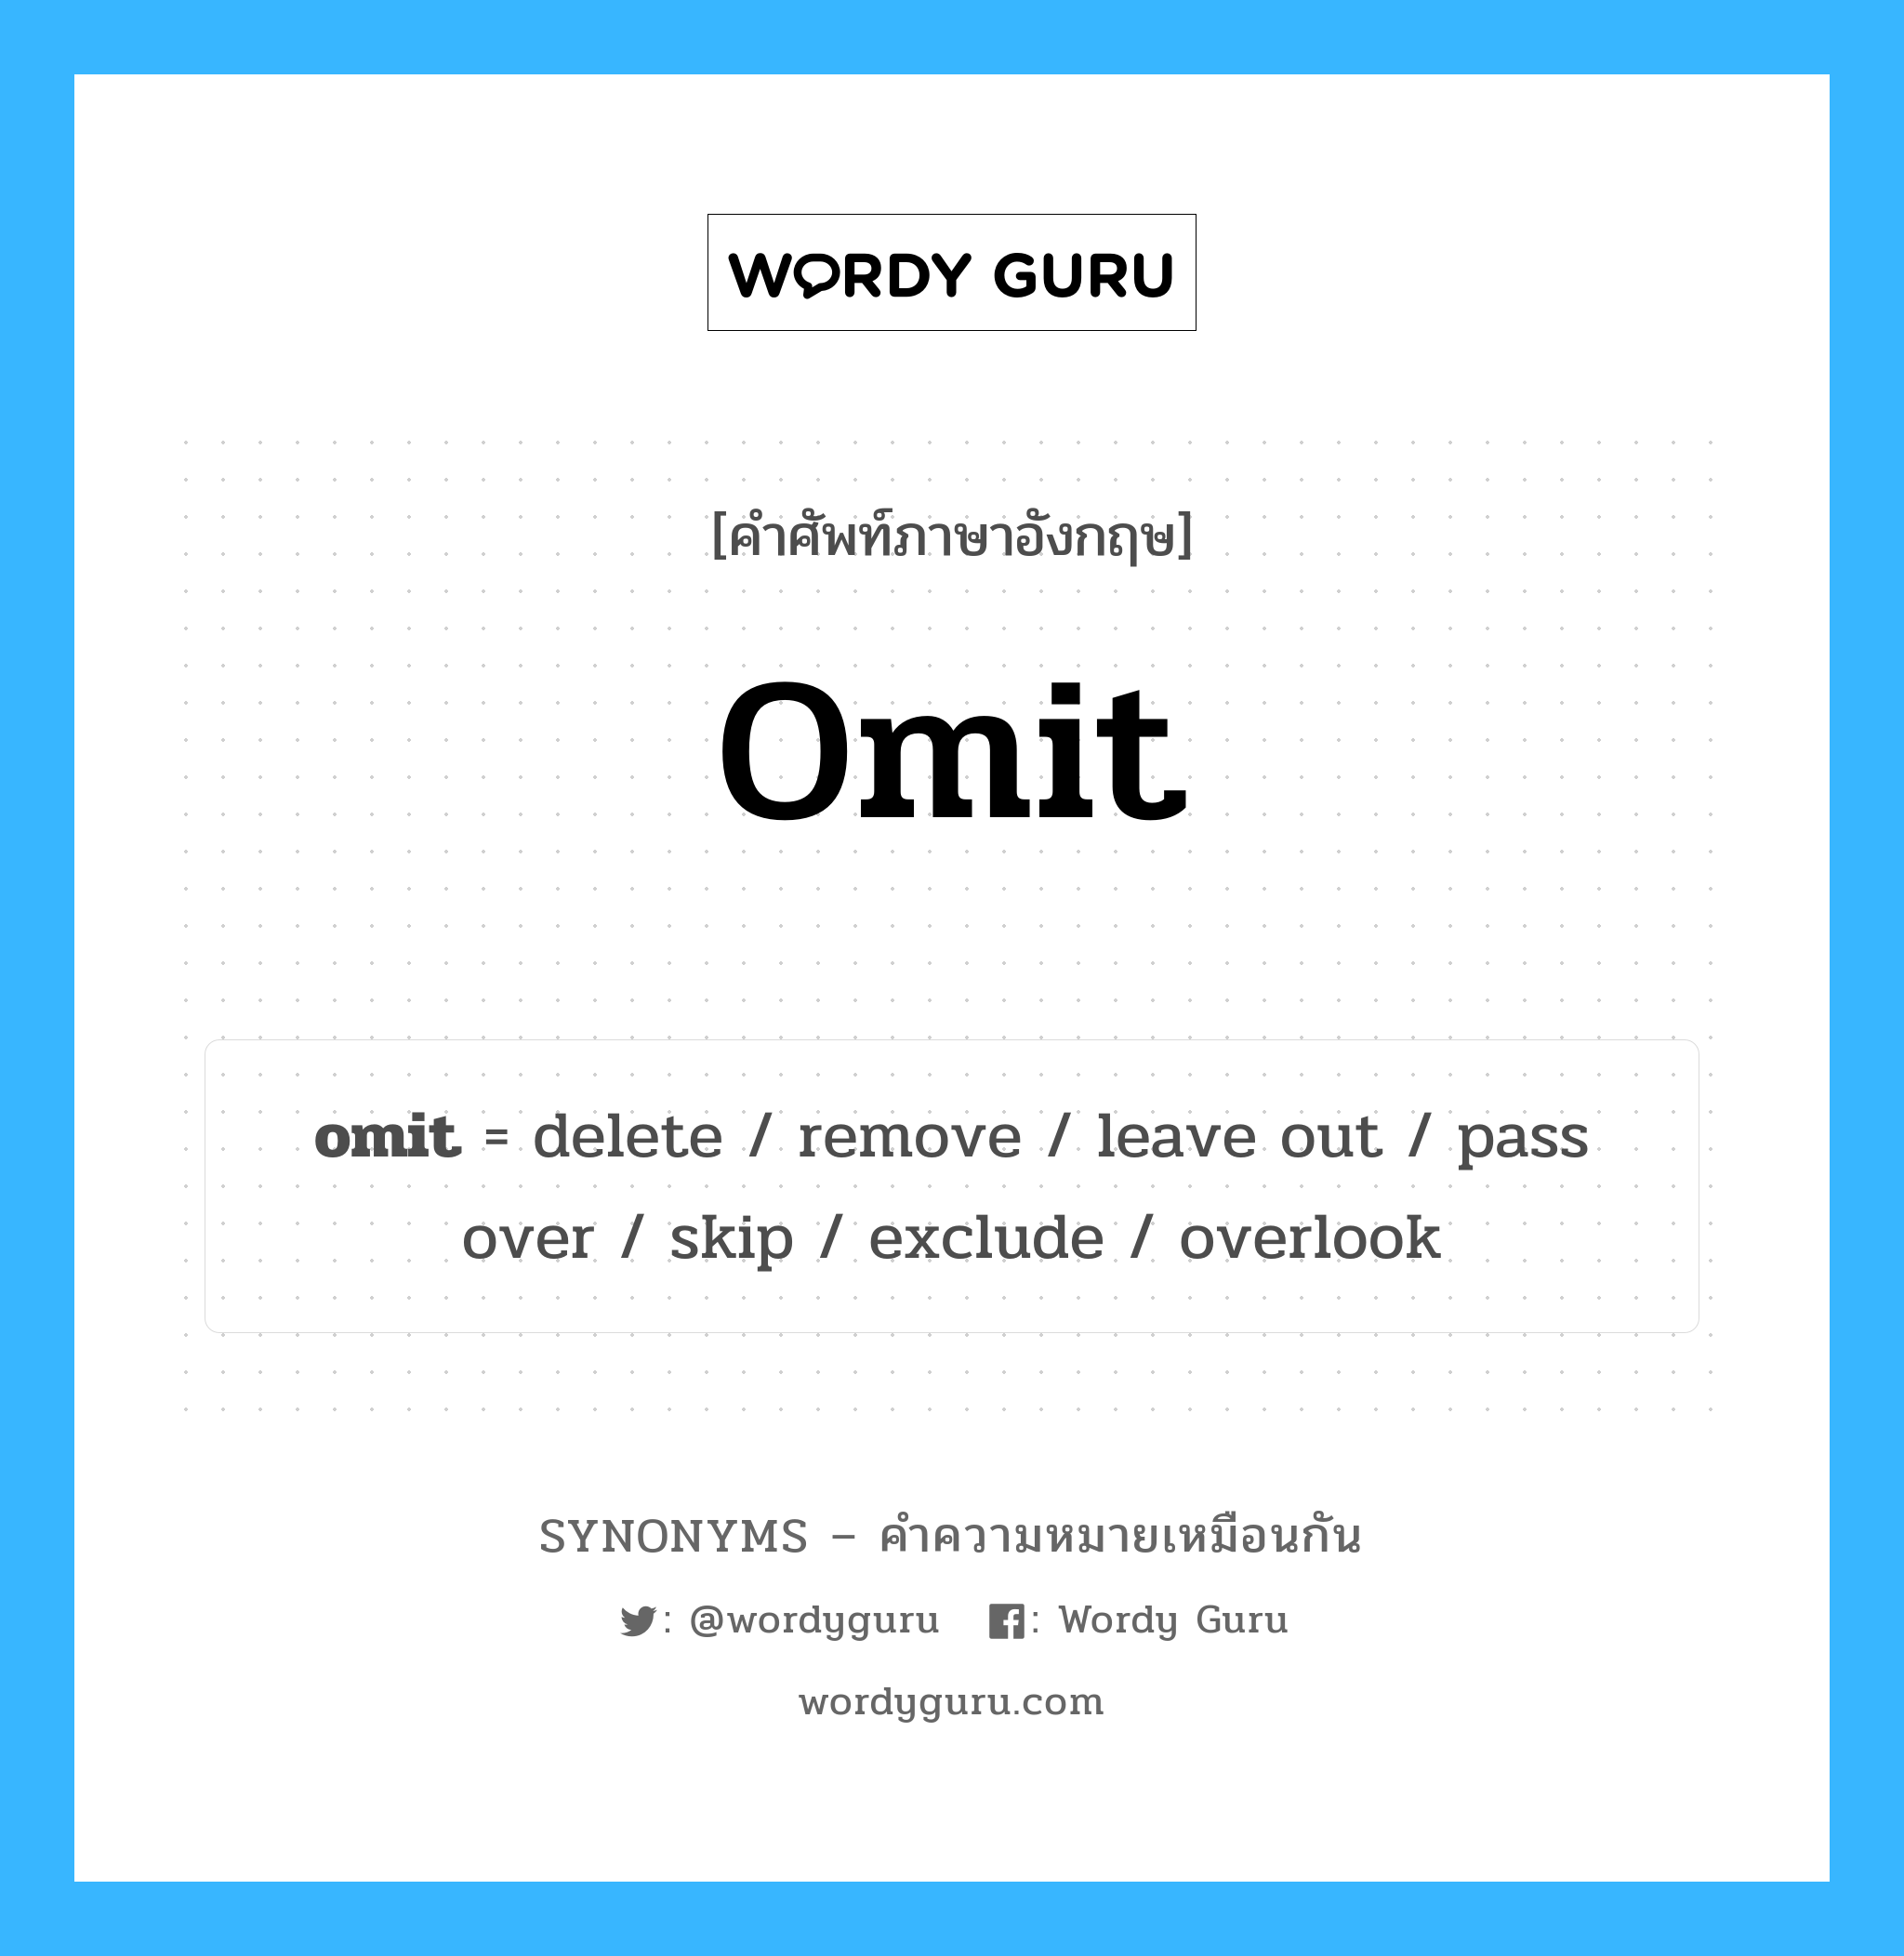 pass over เป็นหนึ่งใน omit และมีคำอื่น ๆ อีกดังนี้, คำศัพท์ภาษาอังกฤษ pass over ความหมายคล้ายกันกับ omit แปลว่า ผ่านไป หมวด omit